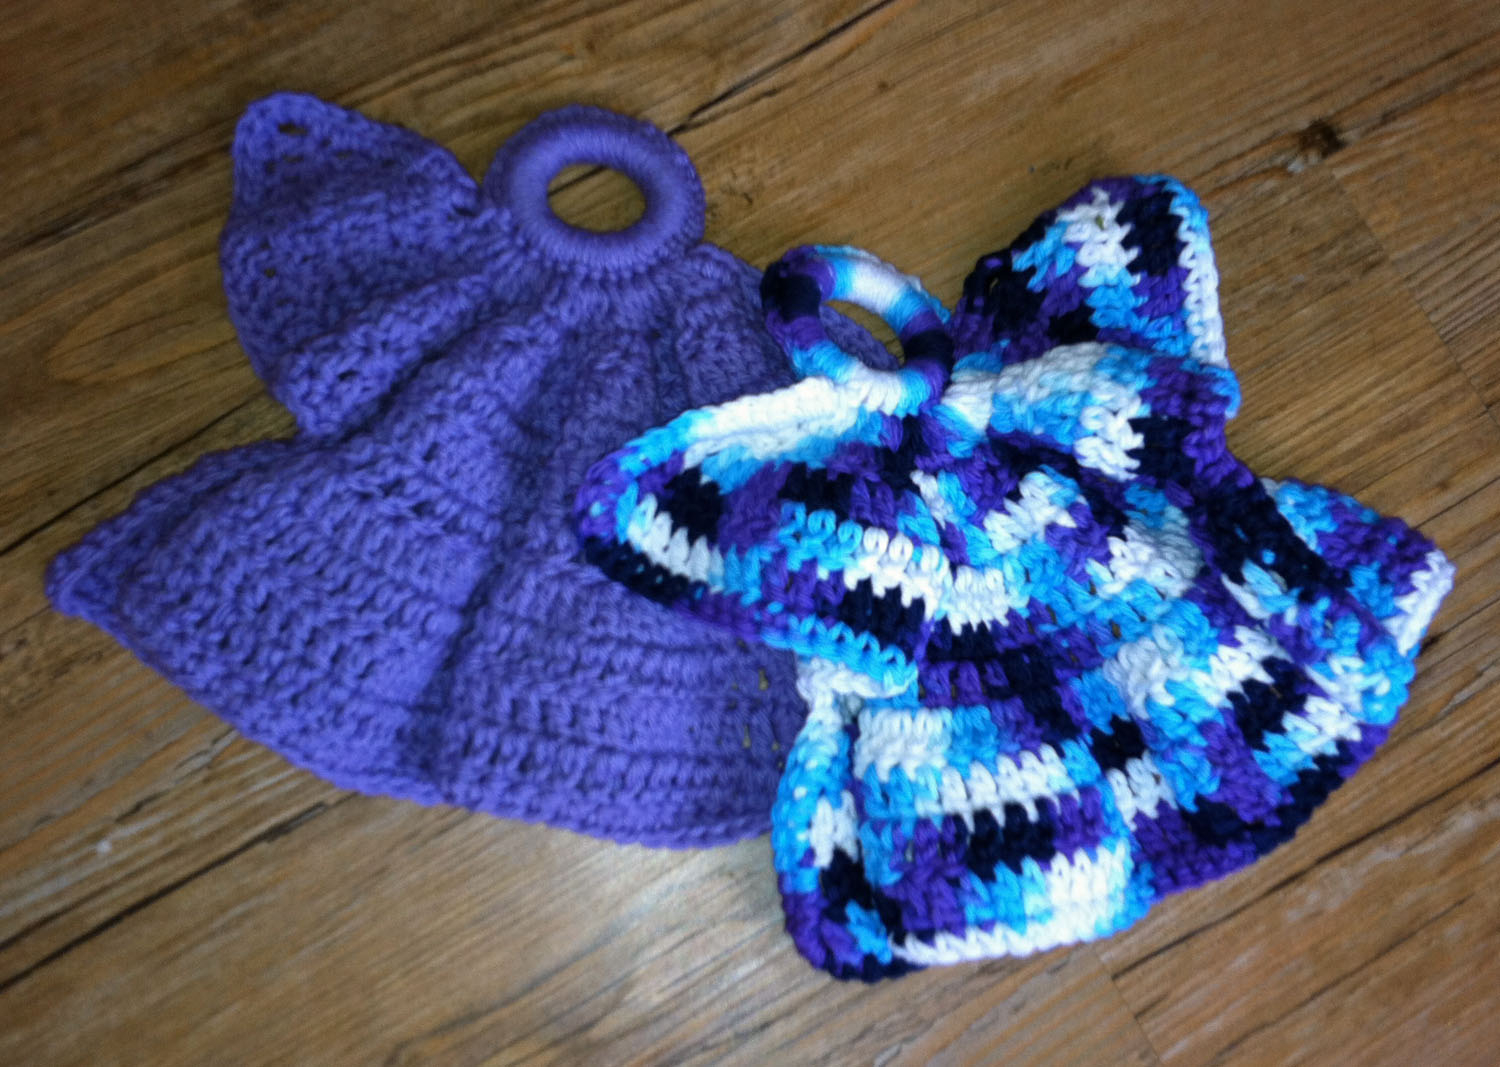 Free Crochet Patterns For Dishcloths 34 New Crochet Dishcloth Patterns For Free Patterns Hub